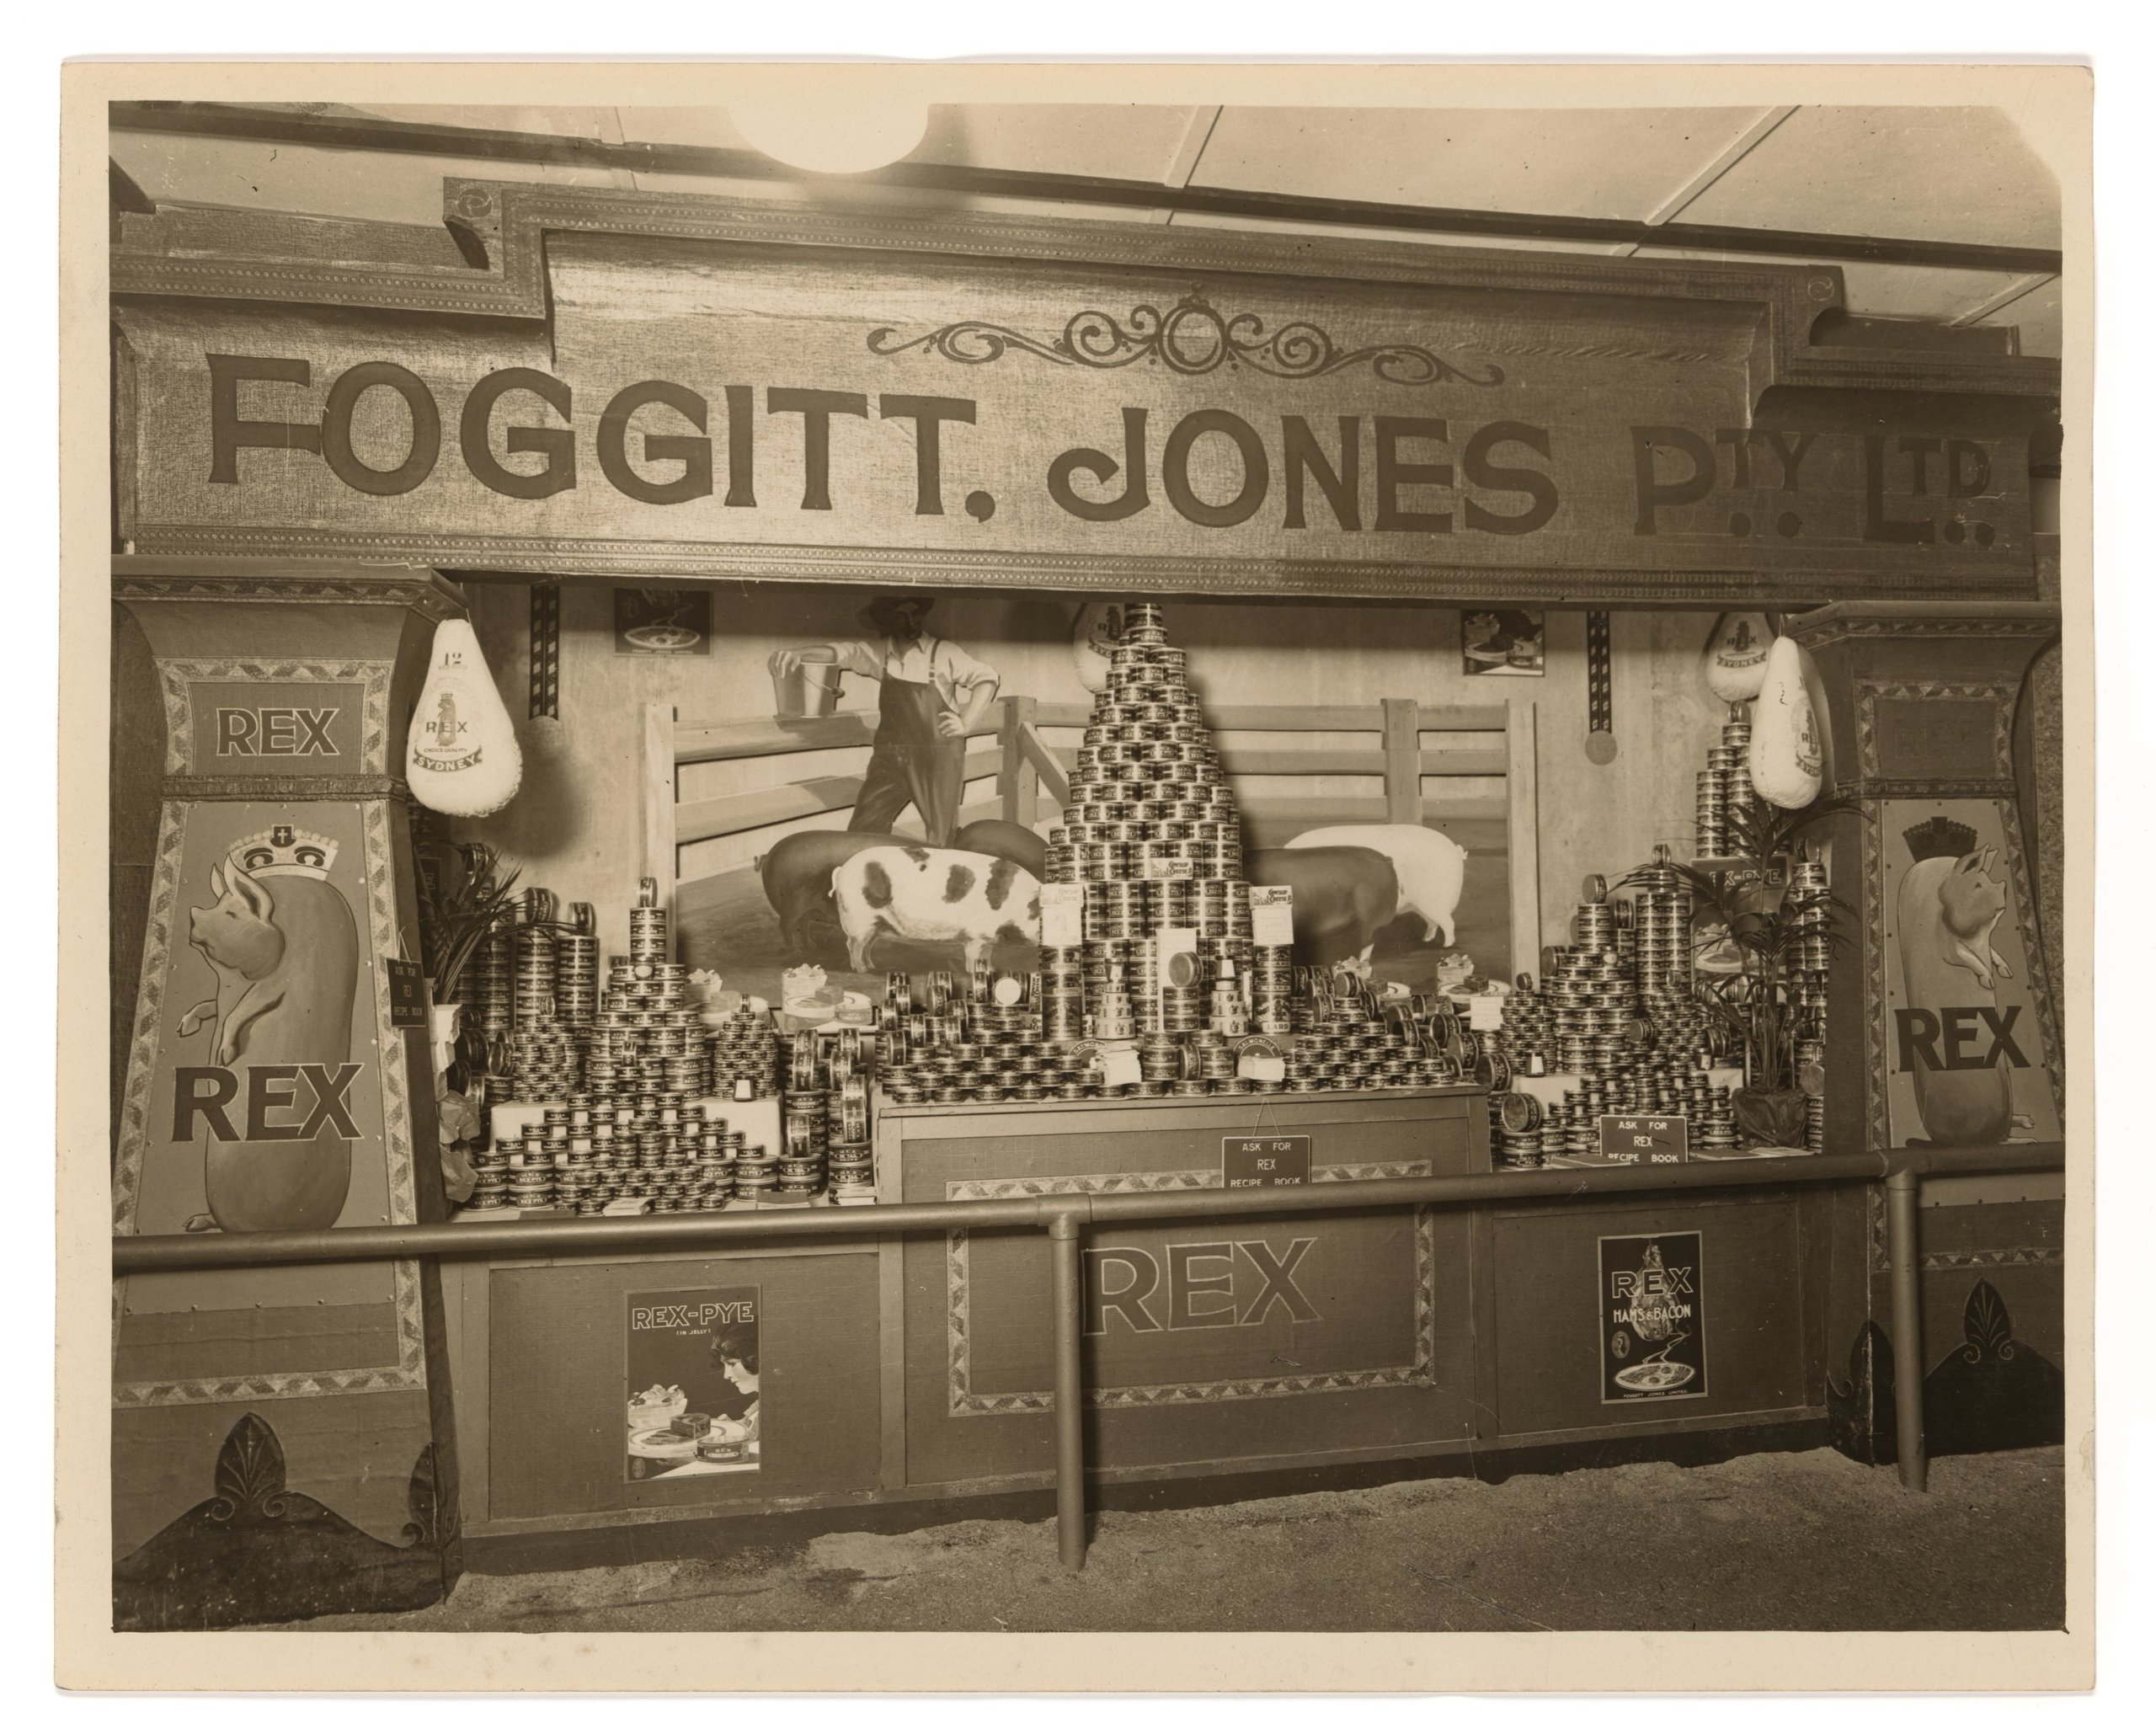 Photograph of promotional exhibit for Foggit Jones Pty Ltd at Sydney Royal Easter Show